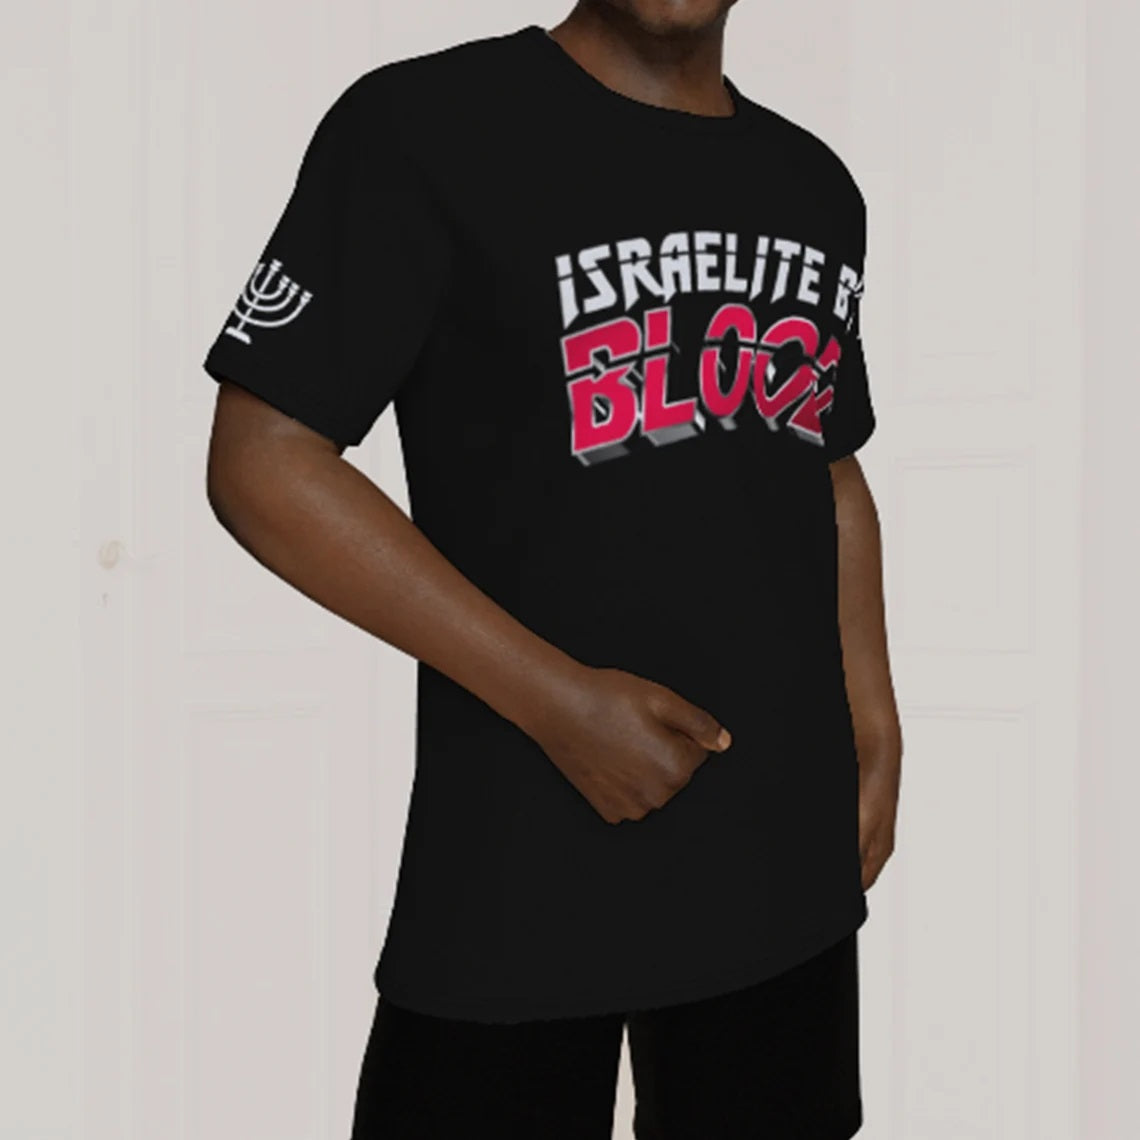 Israelite By Blood T-shirt